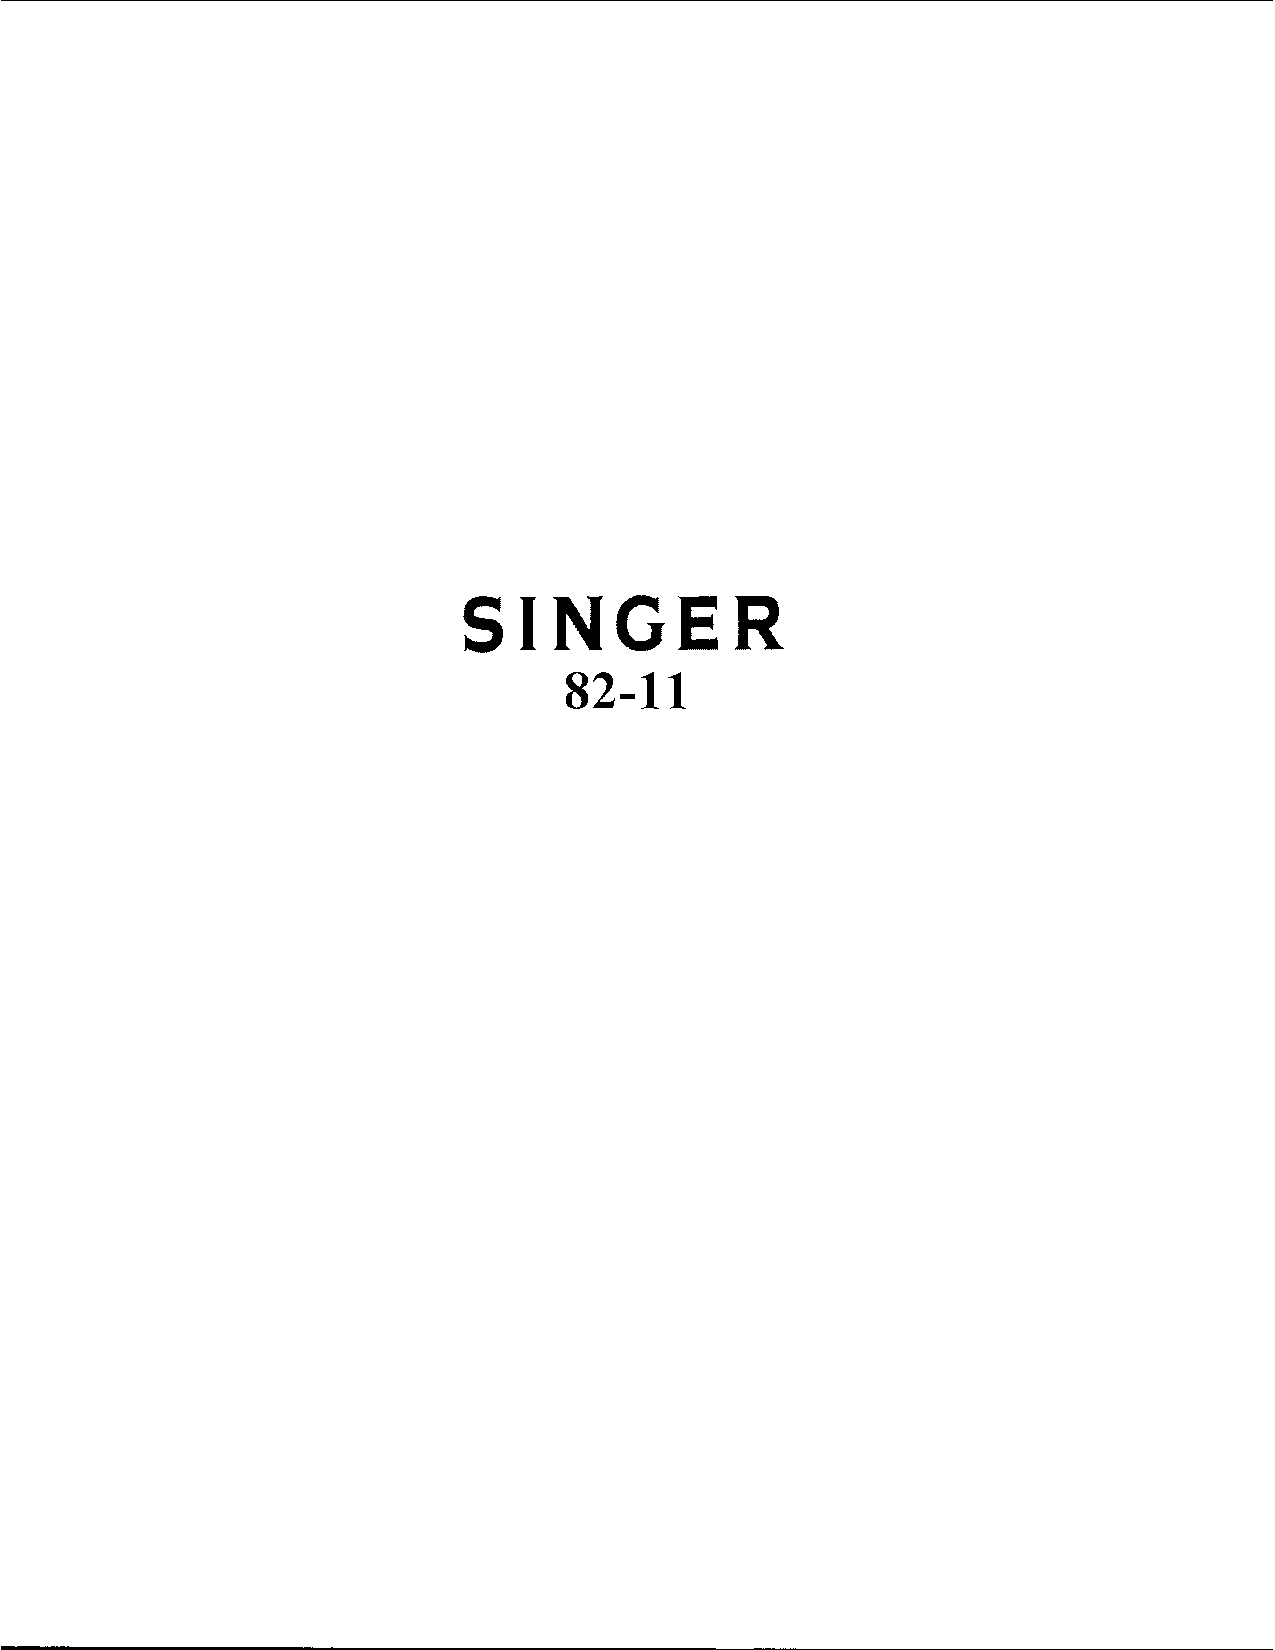 Singer 82-11 User Manual